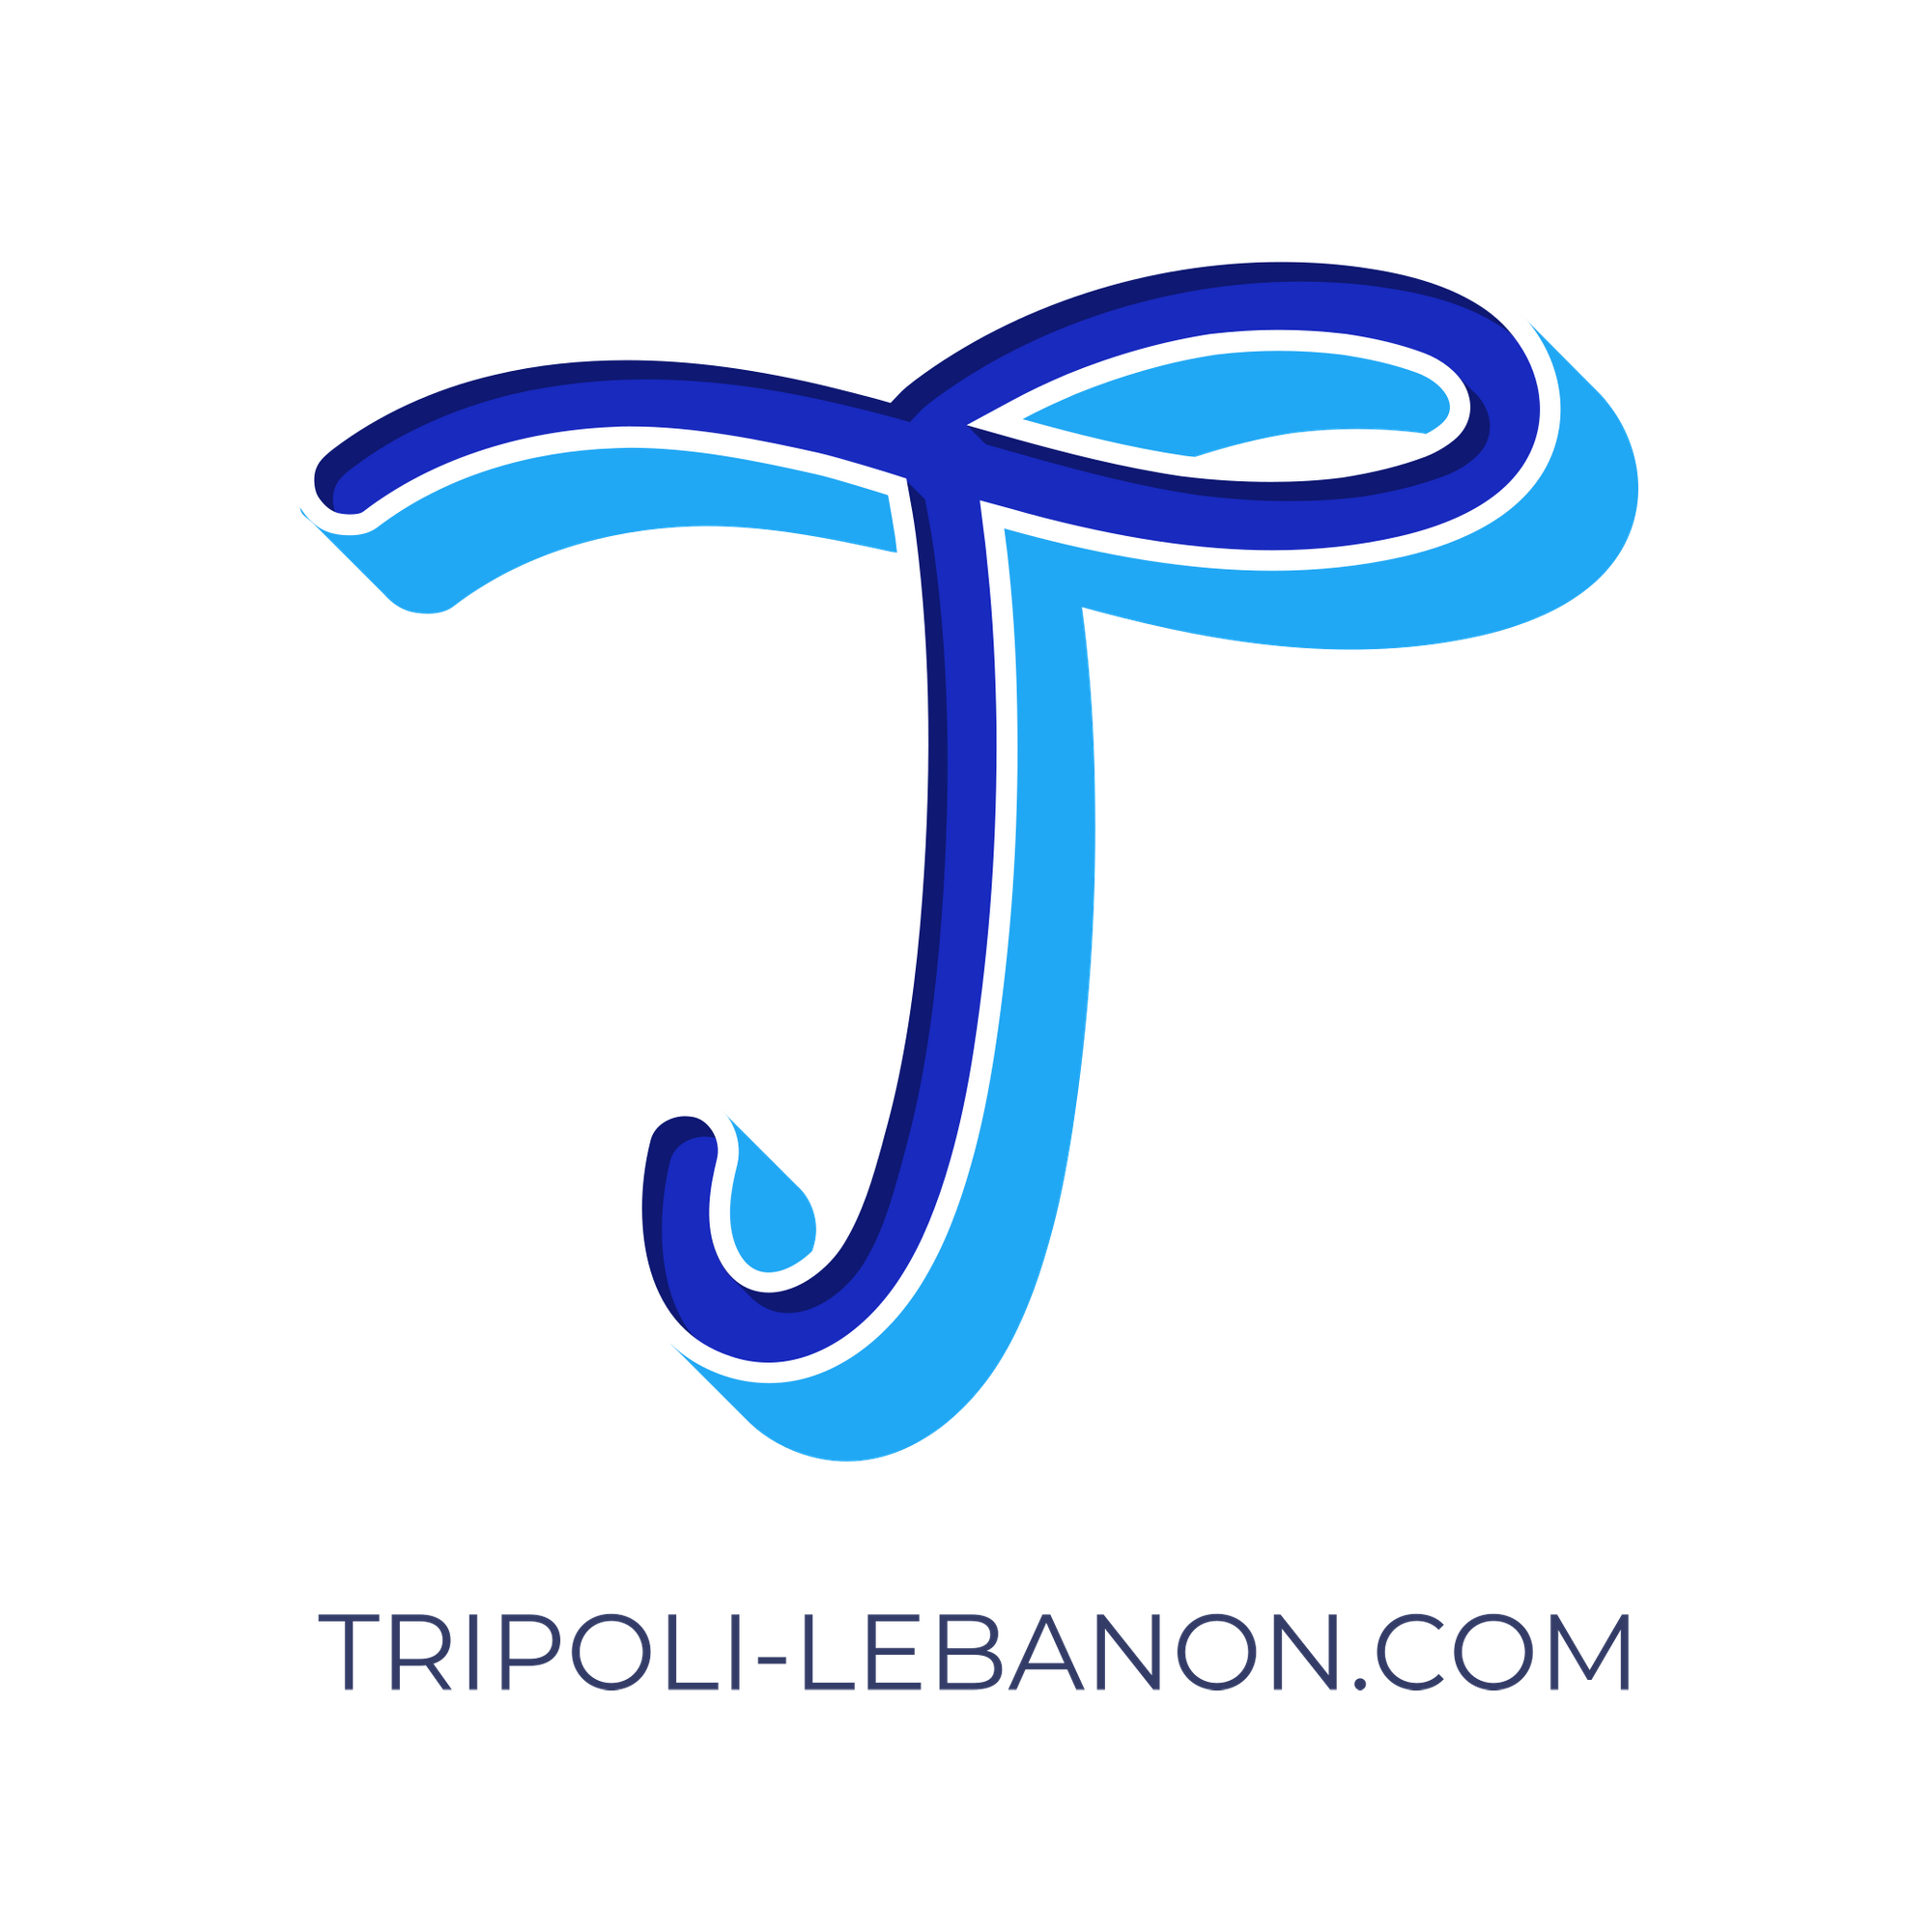 Tripoli-Lebanon.com -  The Website Of The City Of Tripoli Lebanon